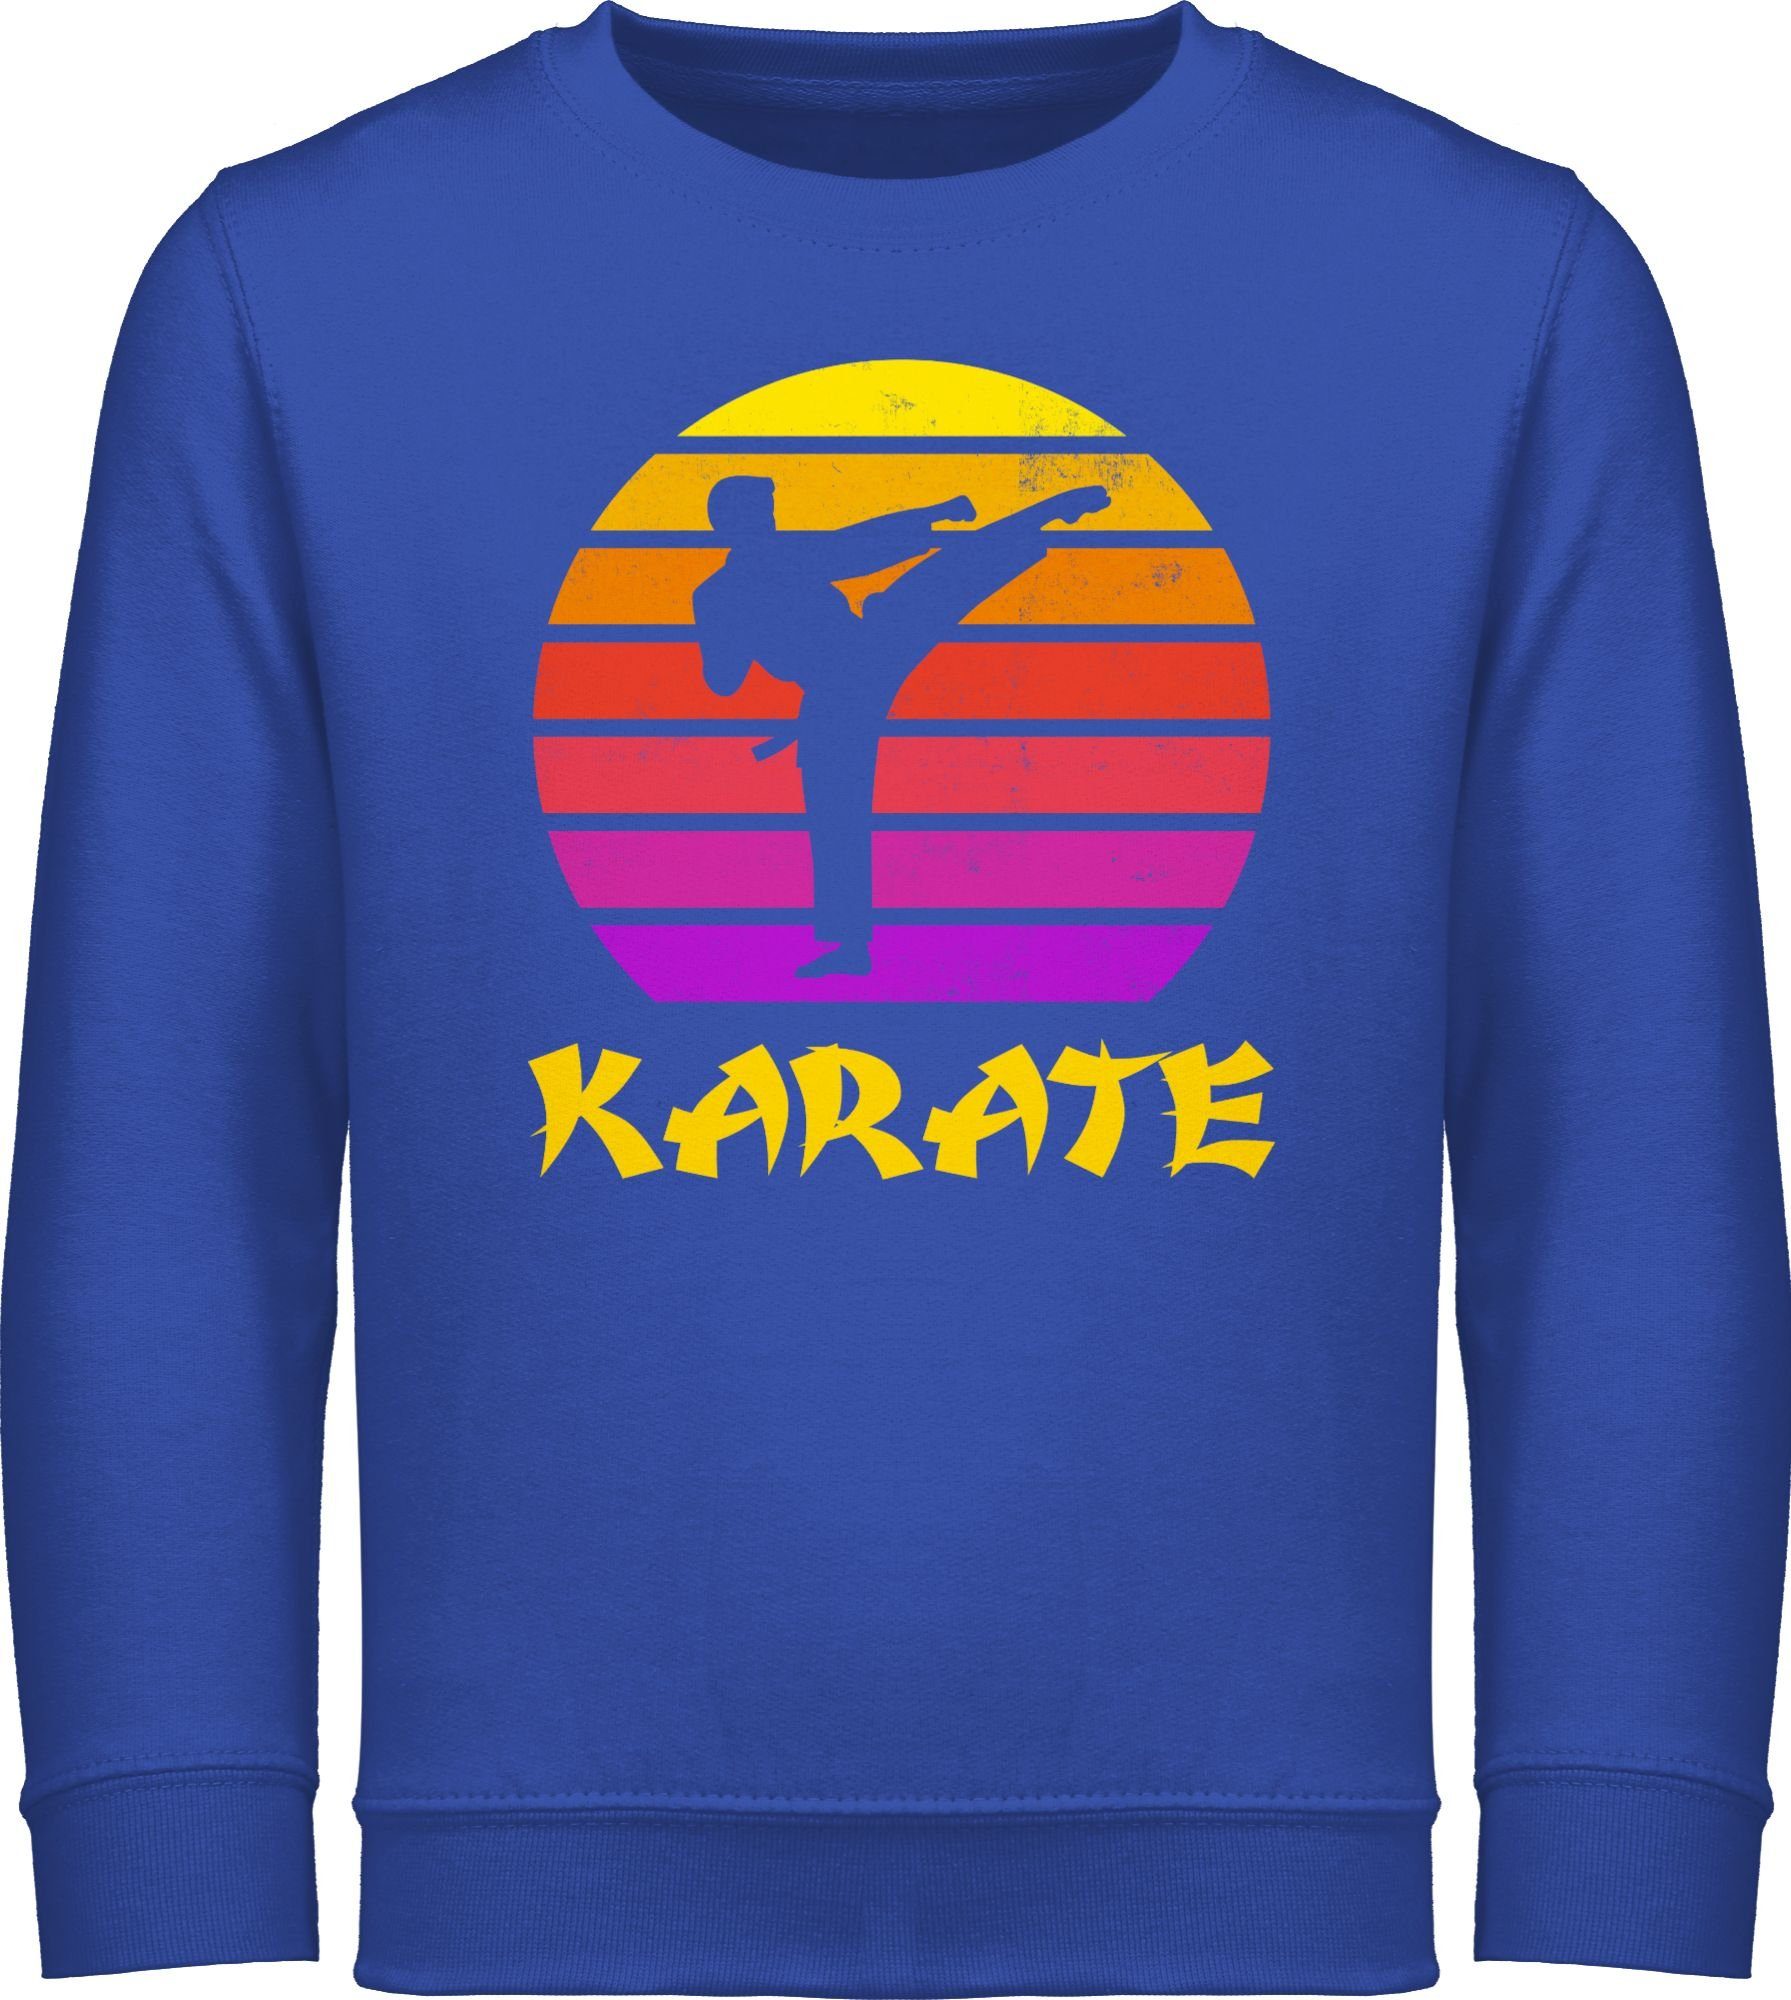 Shirtracer Sweatshirt Karate Retro Sonne Kinder Sport Kleidung 3 Royalblau | Sweatshirts